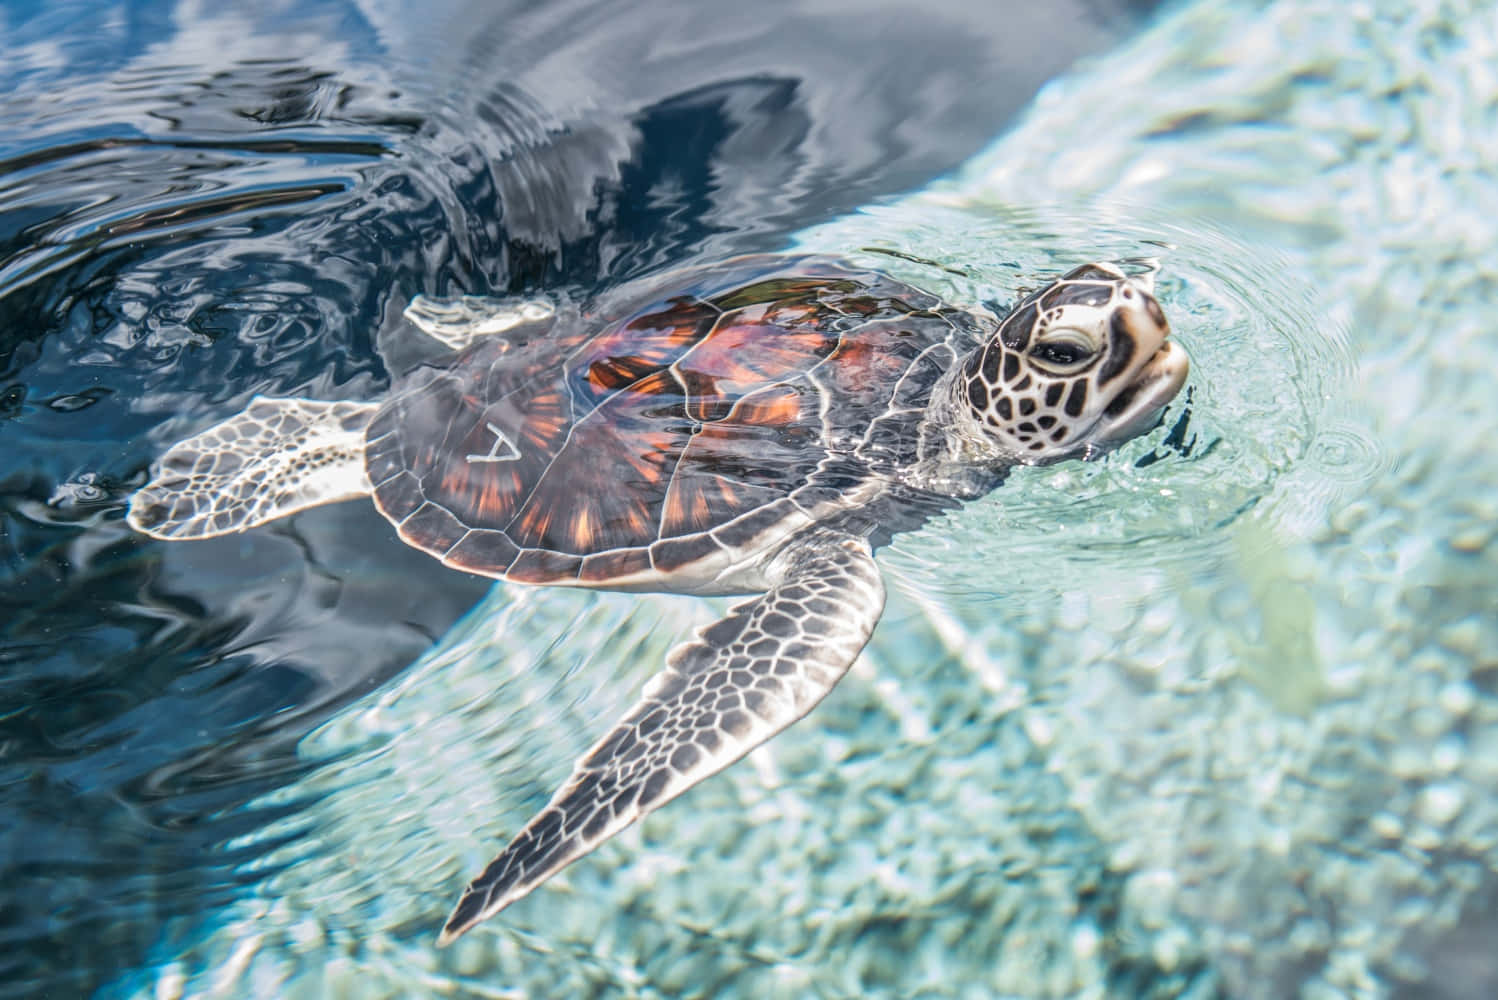 A majestic sea turtle swimming in the blue ocean